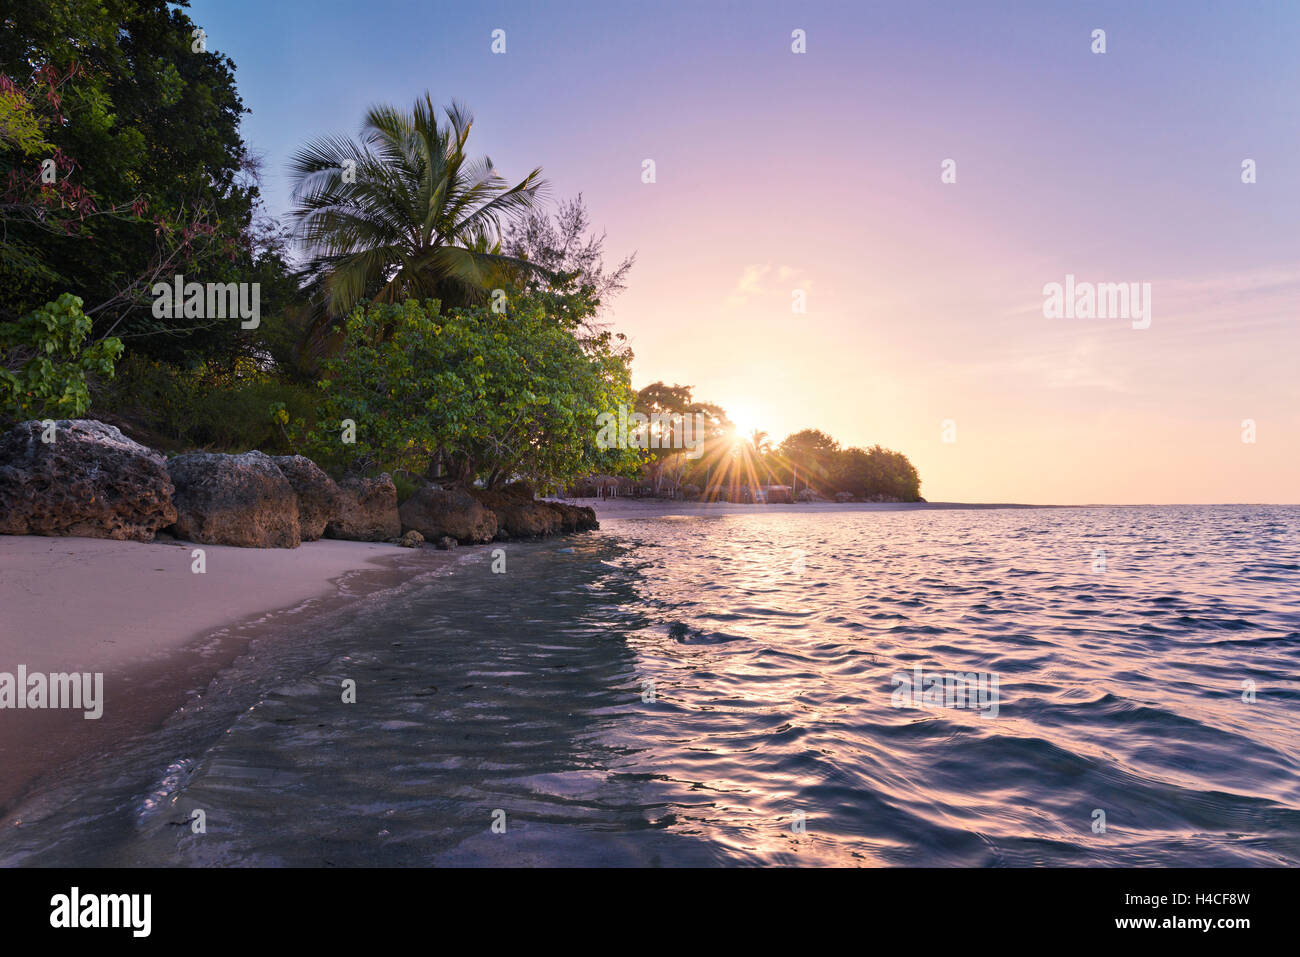 Guadeloupe, the Caribbean, France, paradise, island, beach, sea, palms, turquoise, Sand, palms, sun, back light, sun star, tropical, light, panorama, scenery Stock Photo